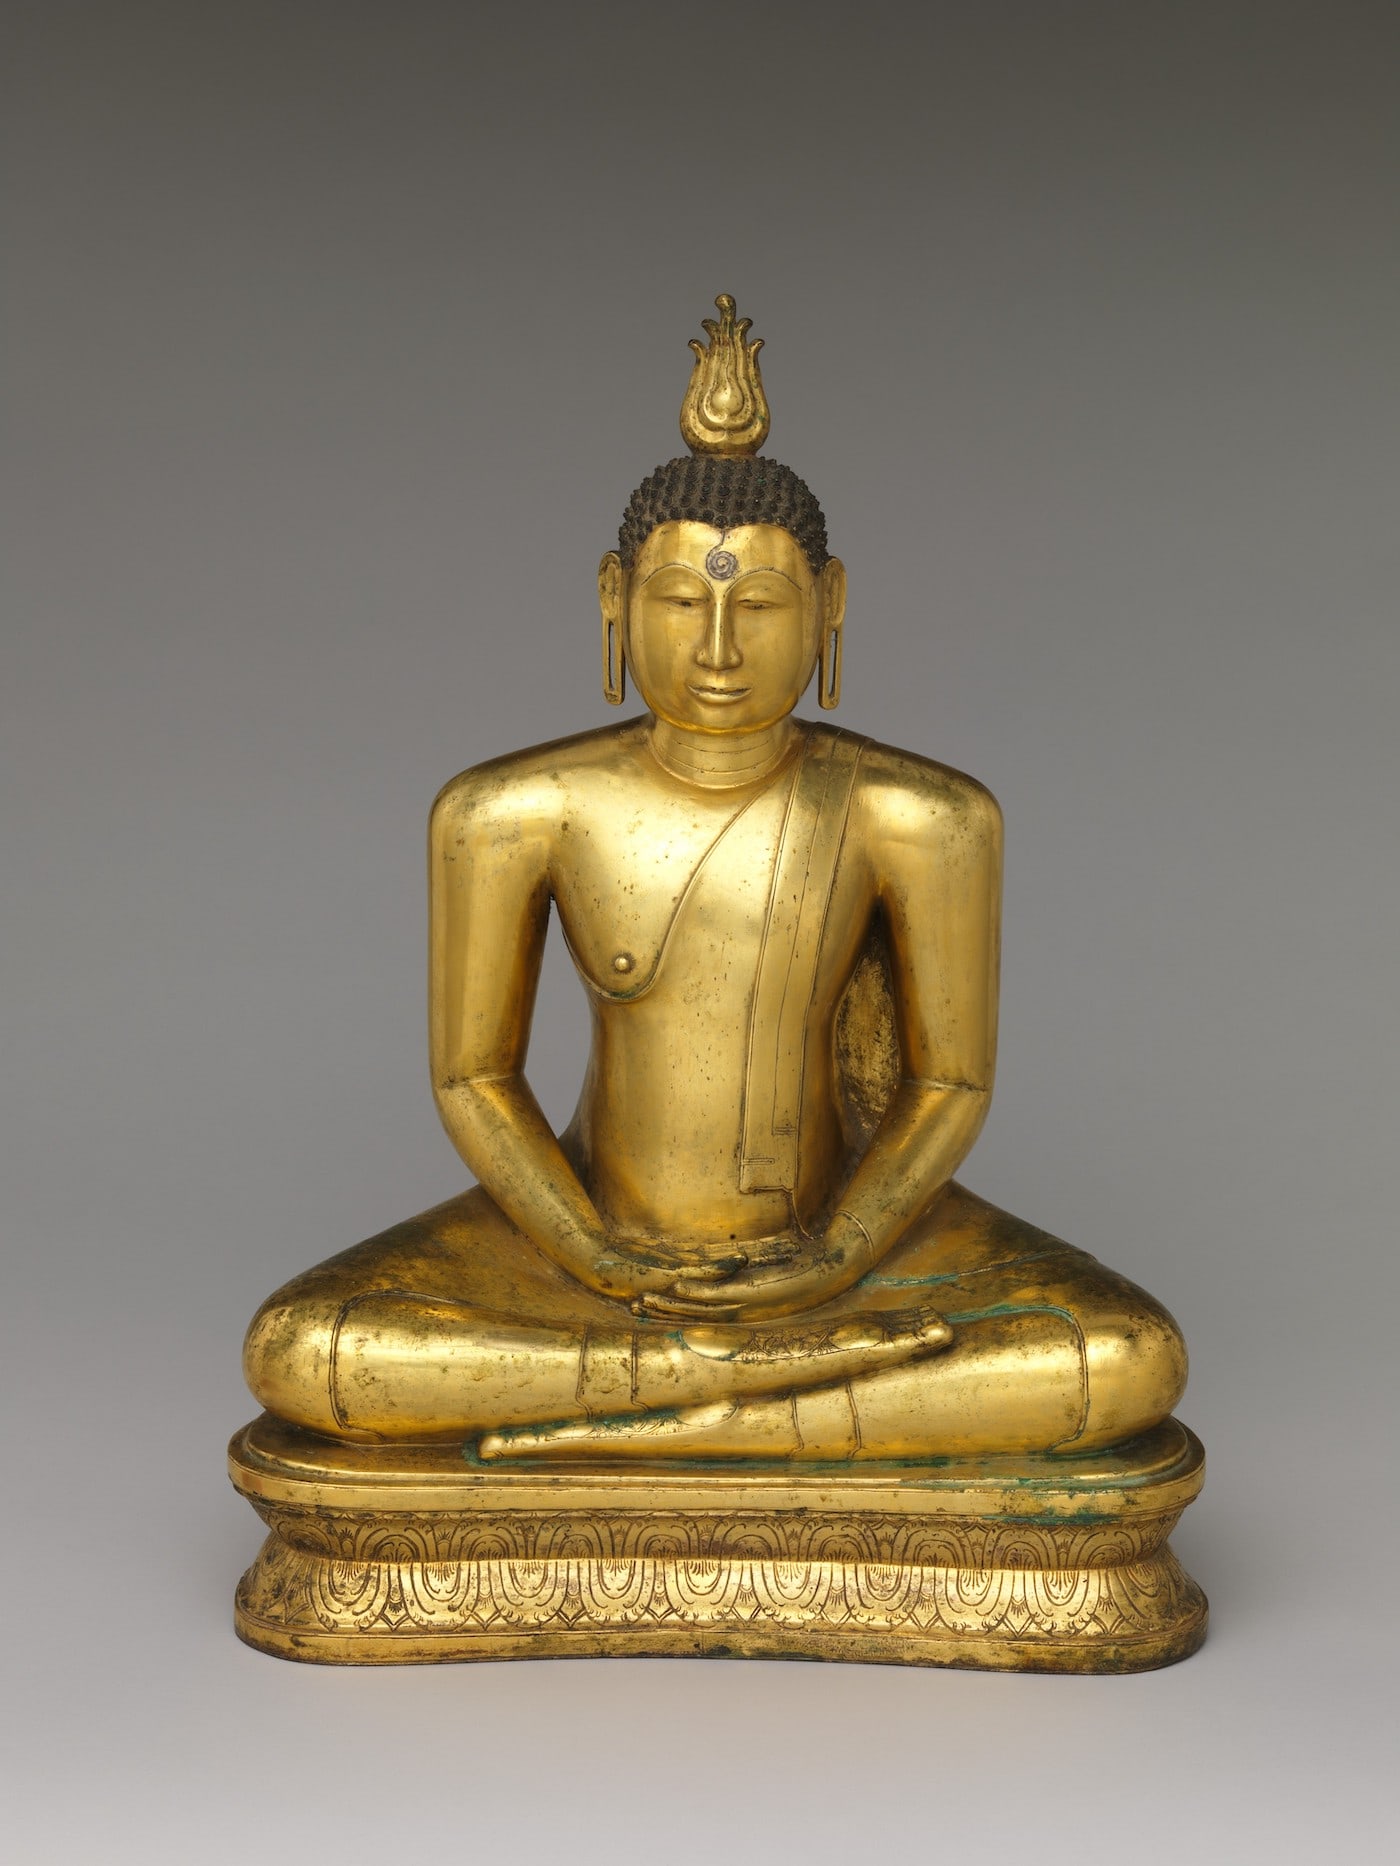 Buddha Seated in Meditation, 16th century, Sri Lanka, The Metropolitan Museum of Art (article on meditation)